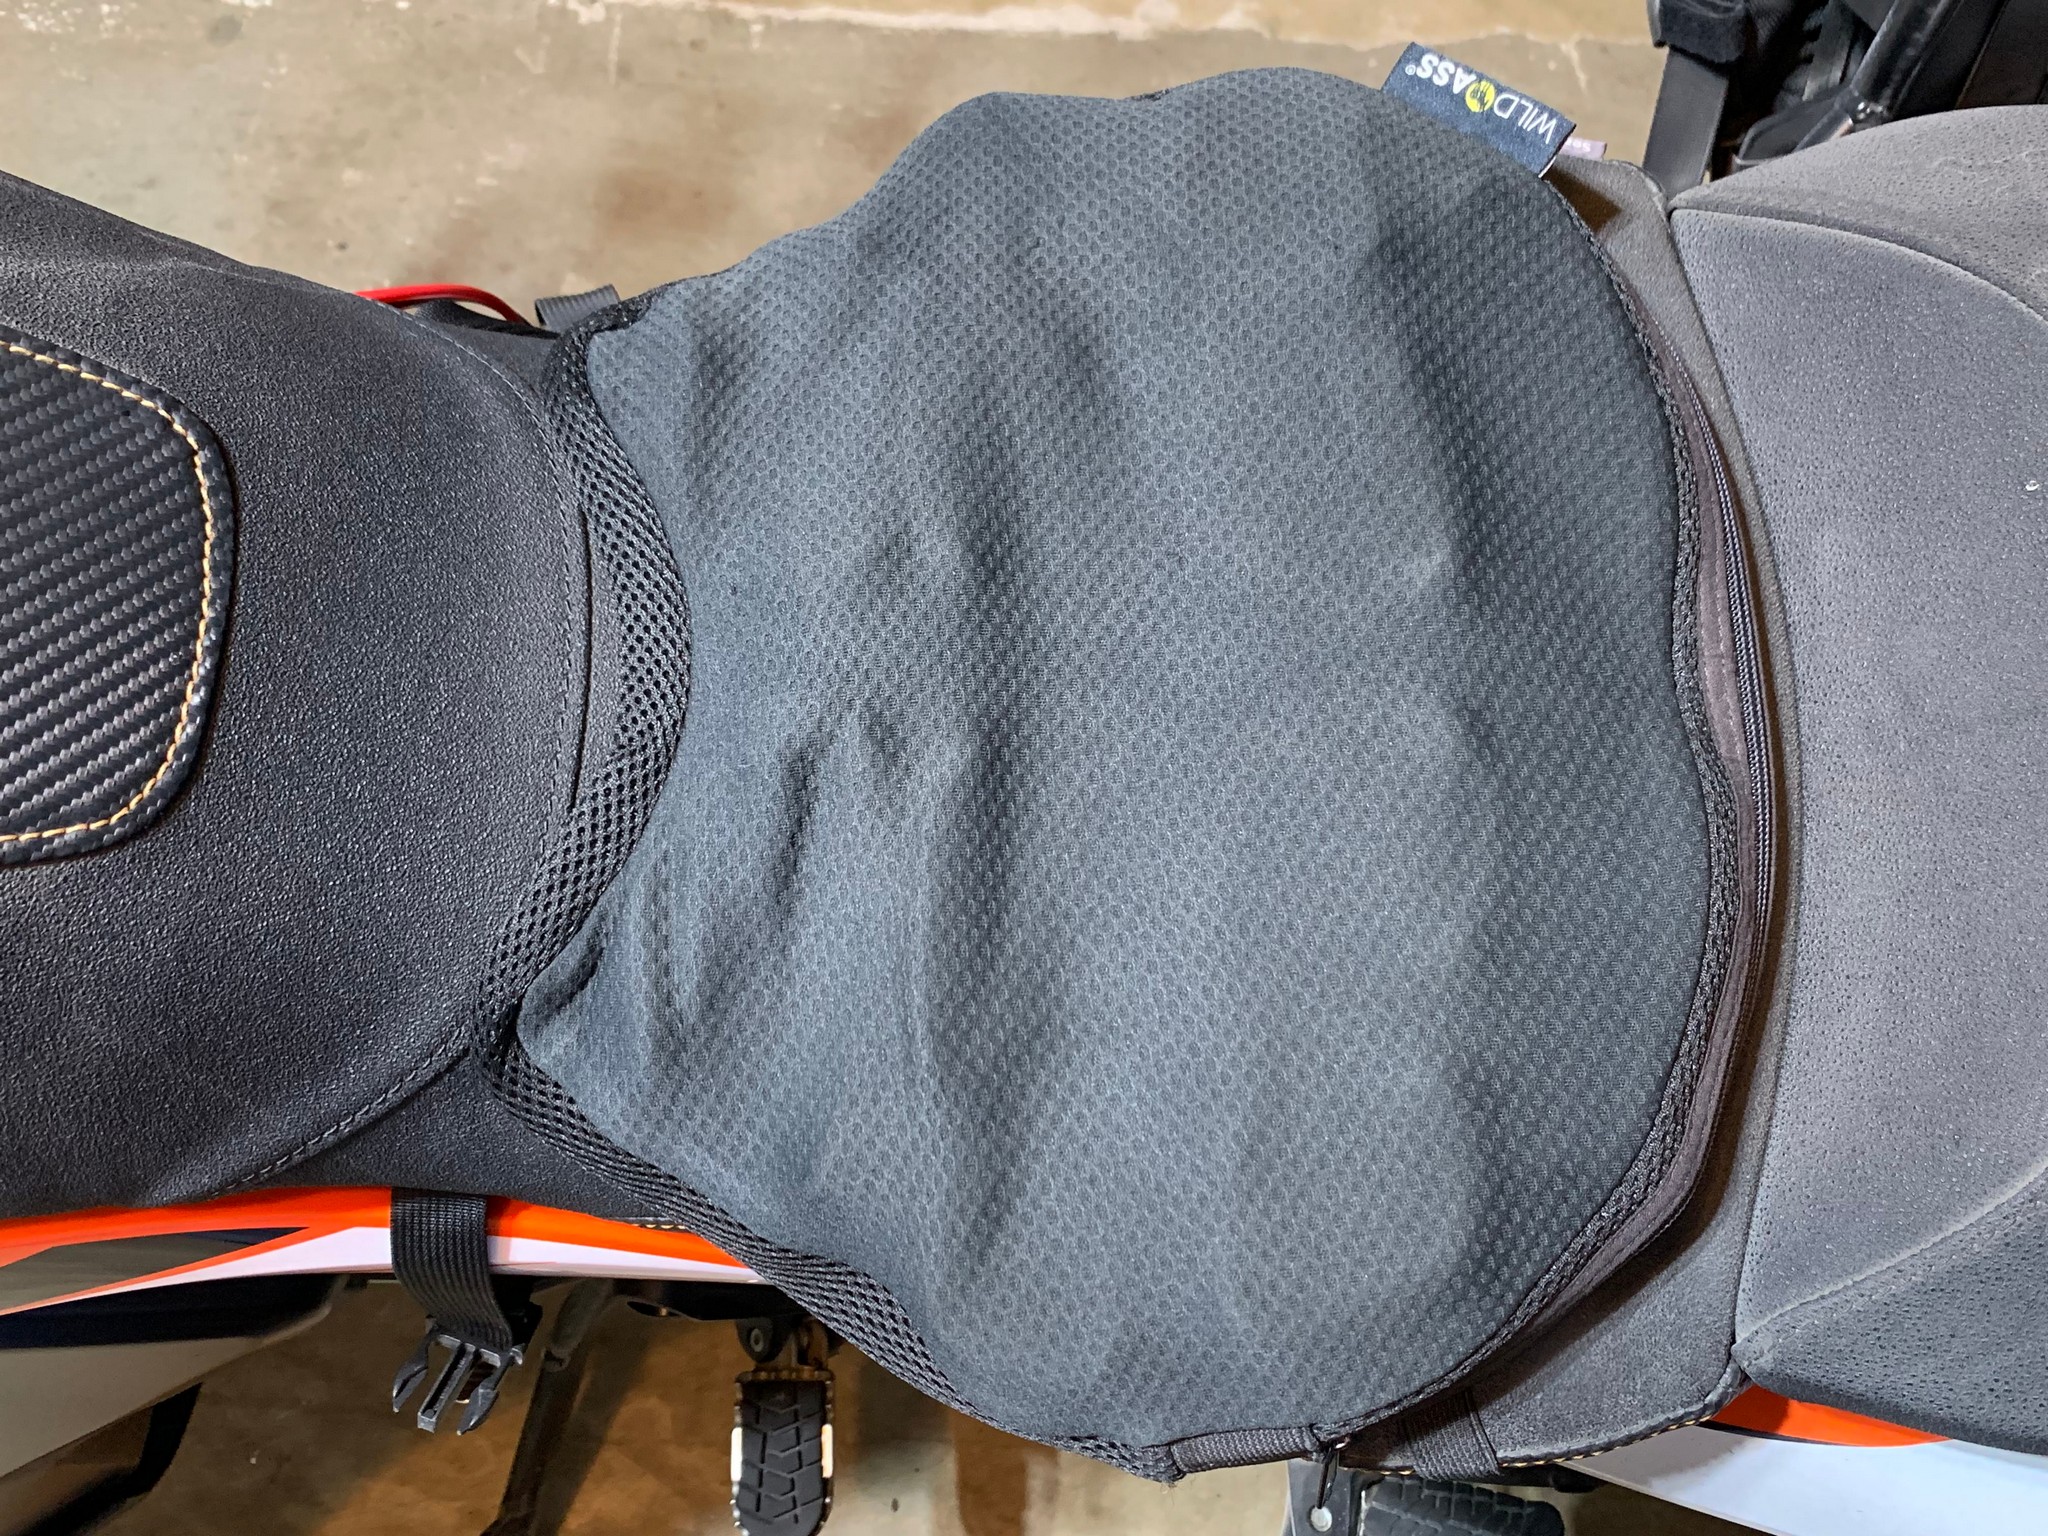 Wild Ass Classic Air Cushion Seat Pad Smart